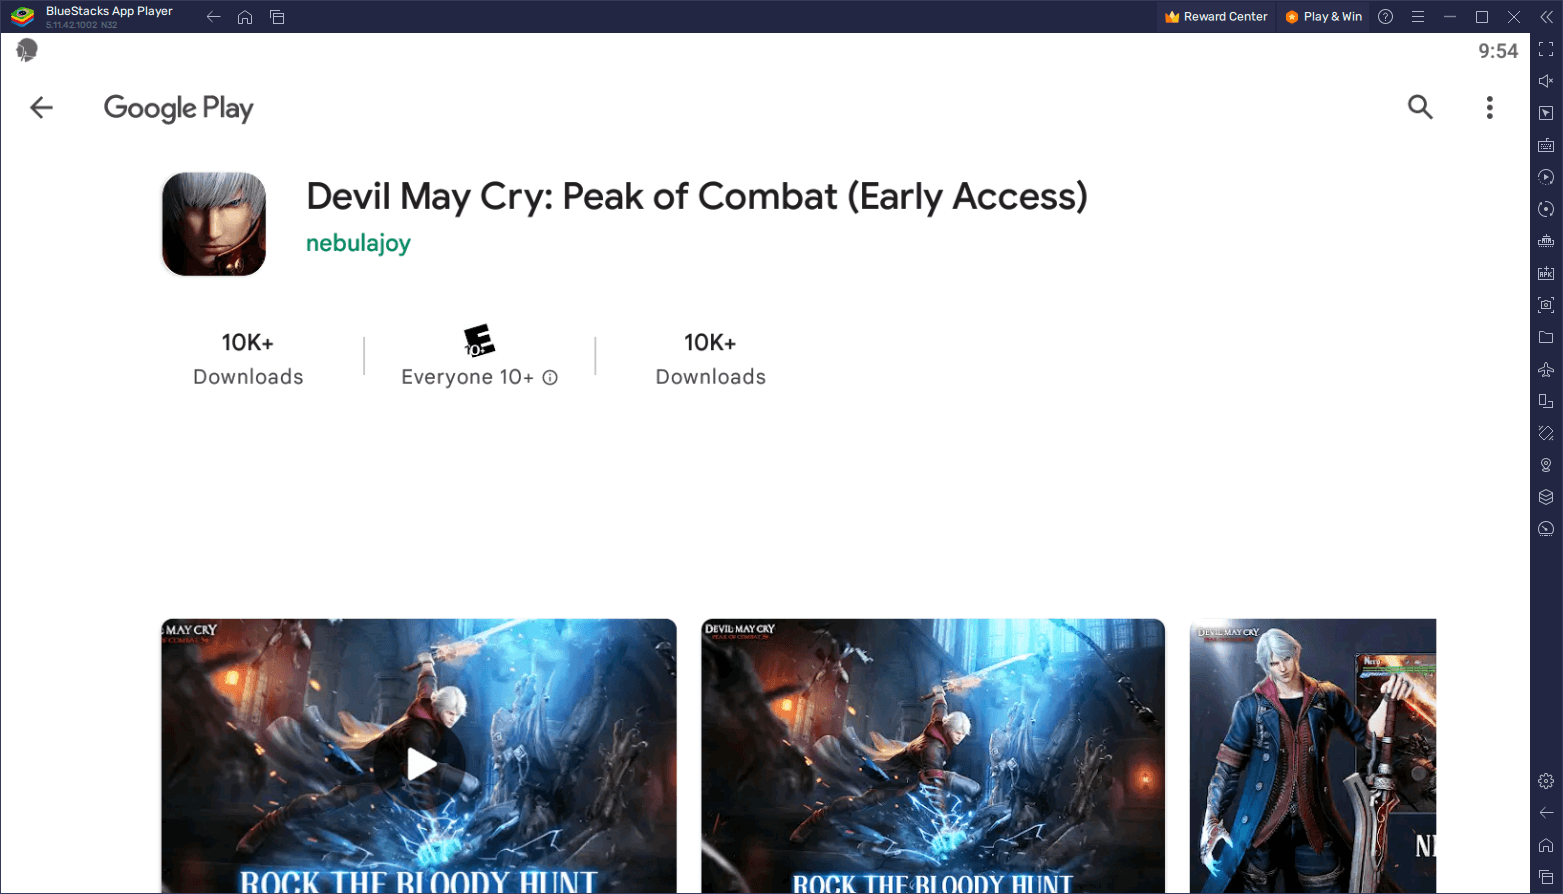 Devil May Cry Peak of Combat Codes – December 2023 